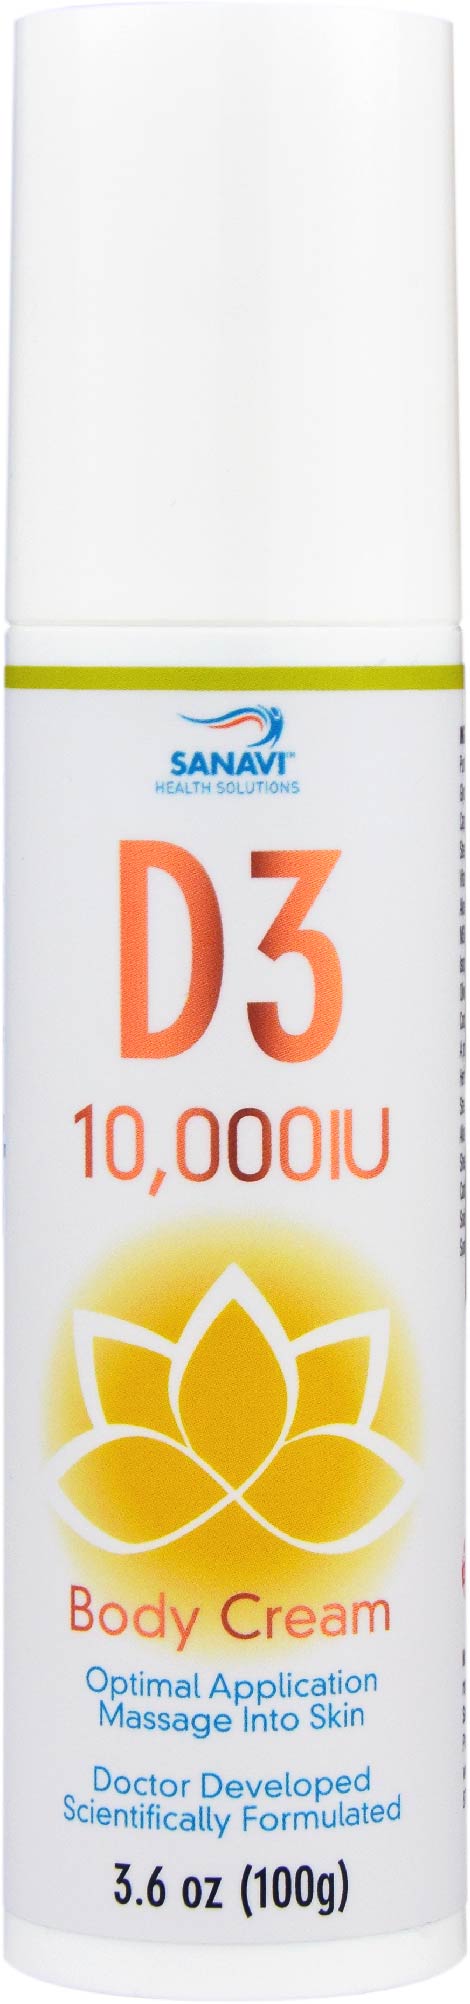 VITAMIN D3 Cream 2 Mo supply; energy, endurance, overall health